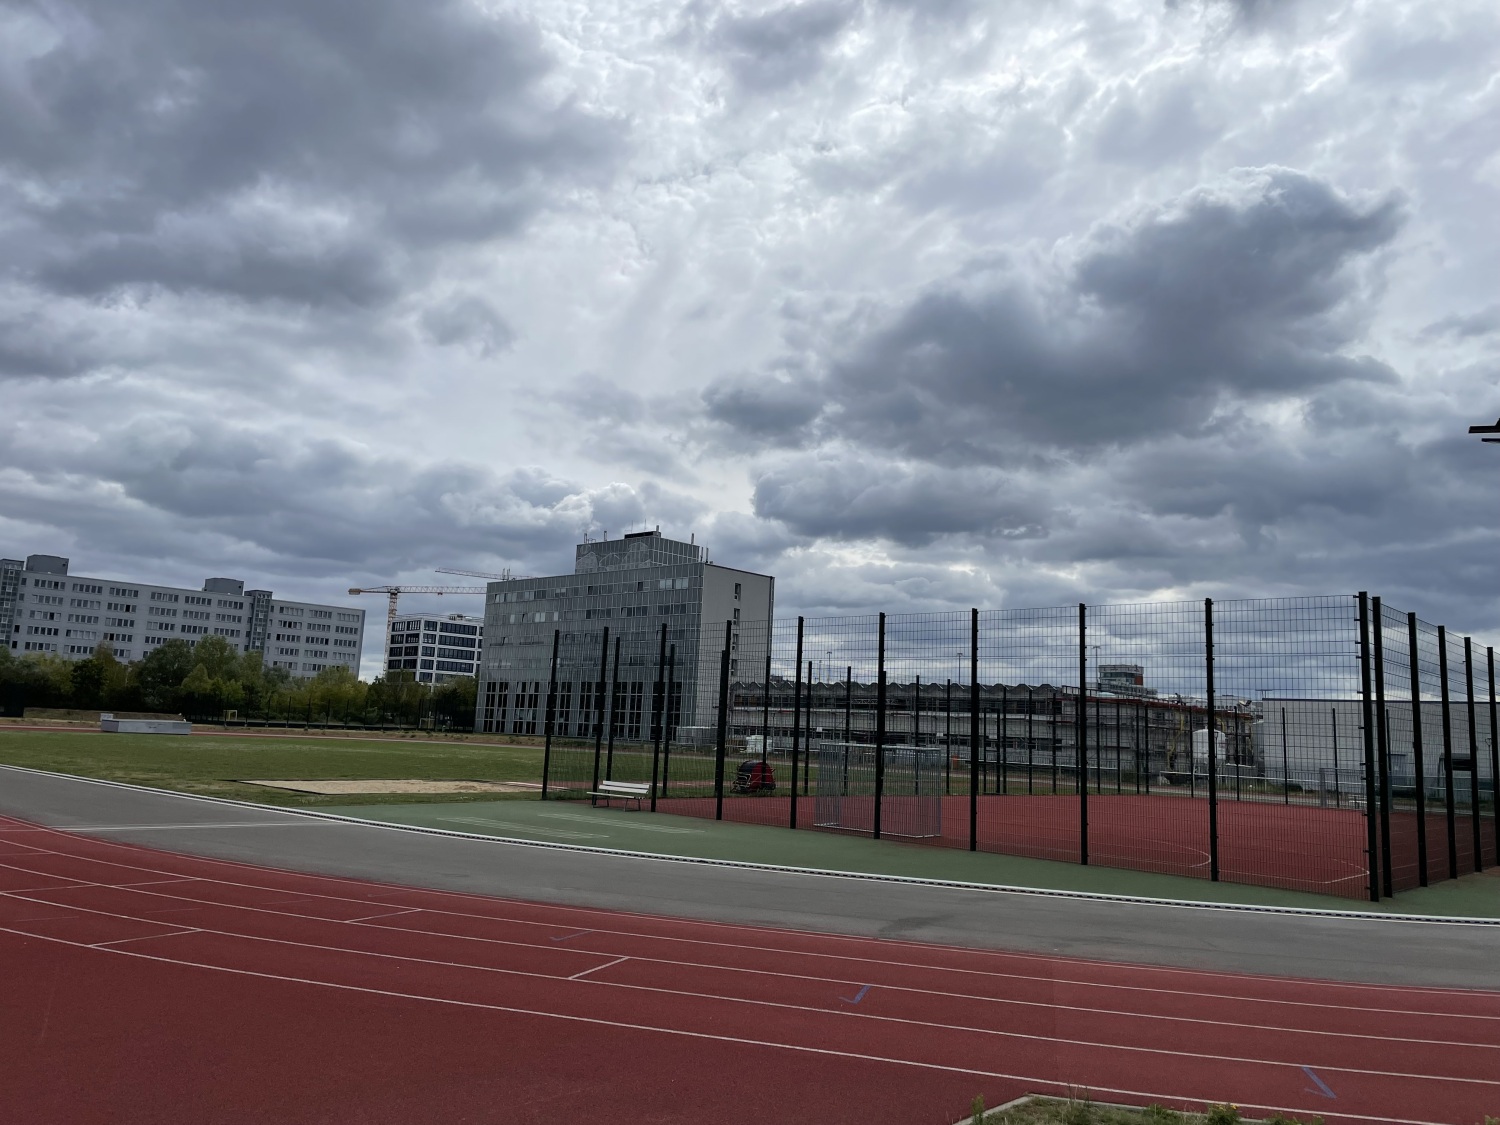 Leichtathletik-Laufbahn im Sportkomplex Paul-Heysestraße